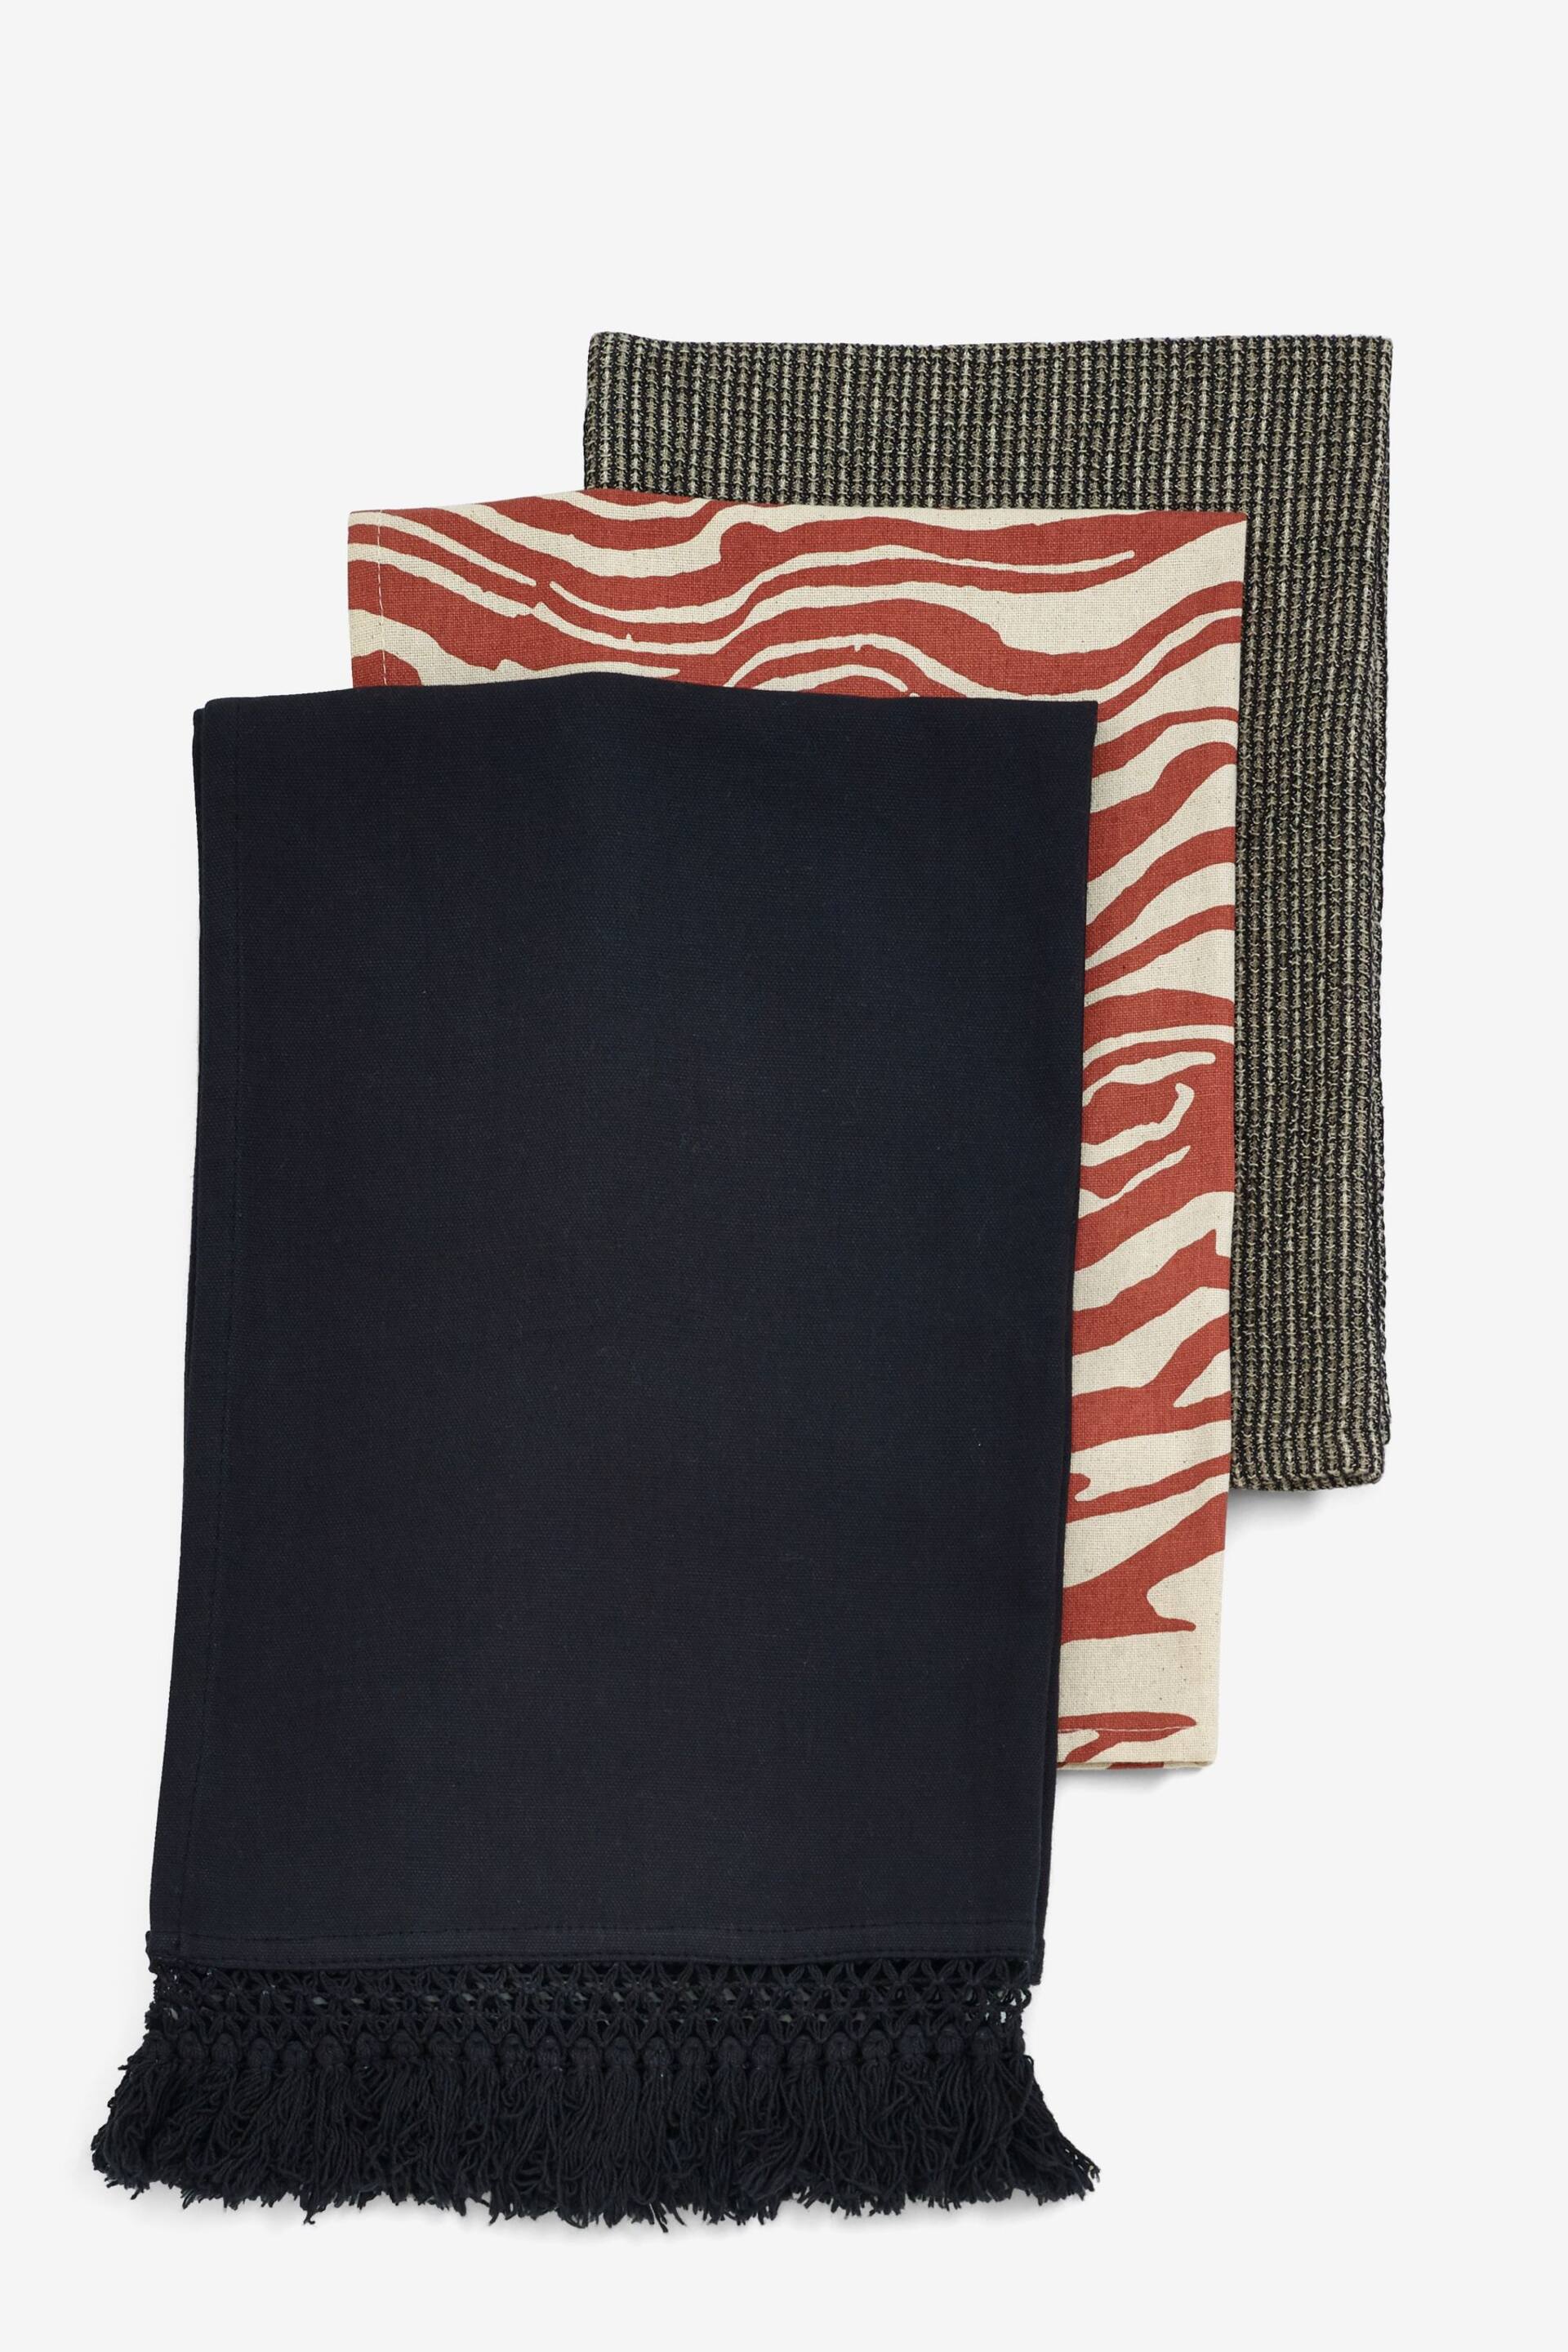 Black Set of 3 Black Global Tea Towels - Image 4 of 4